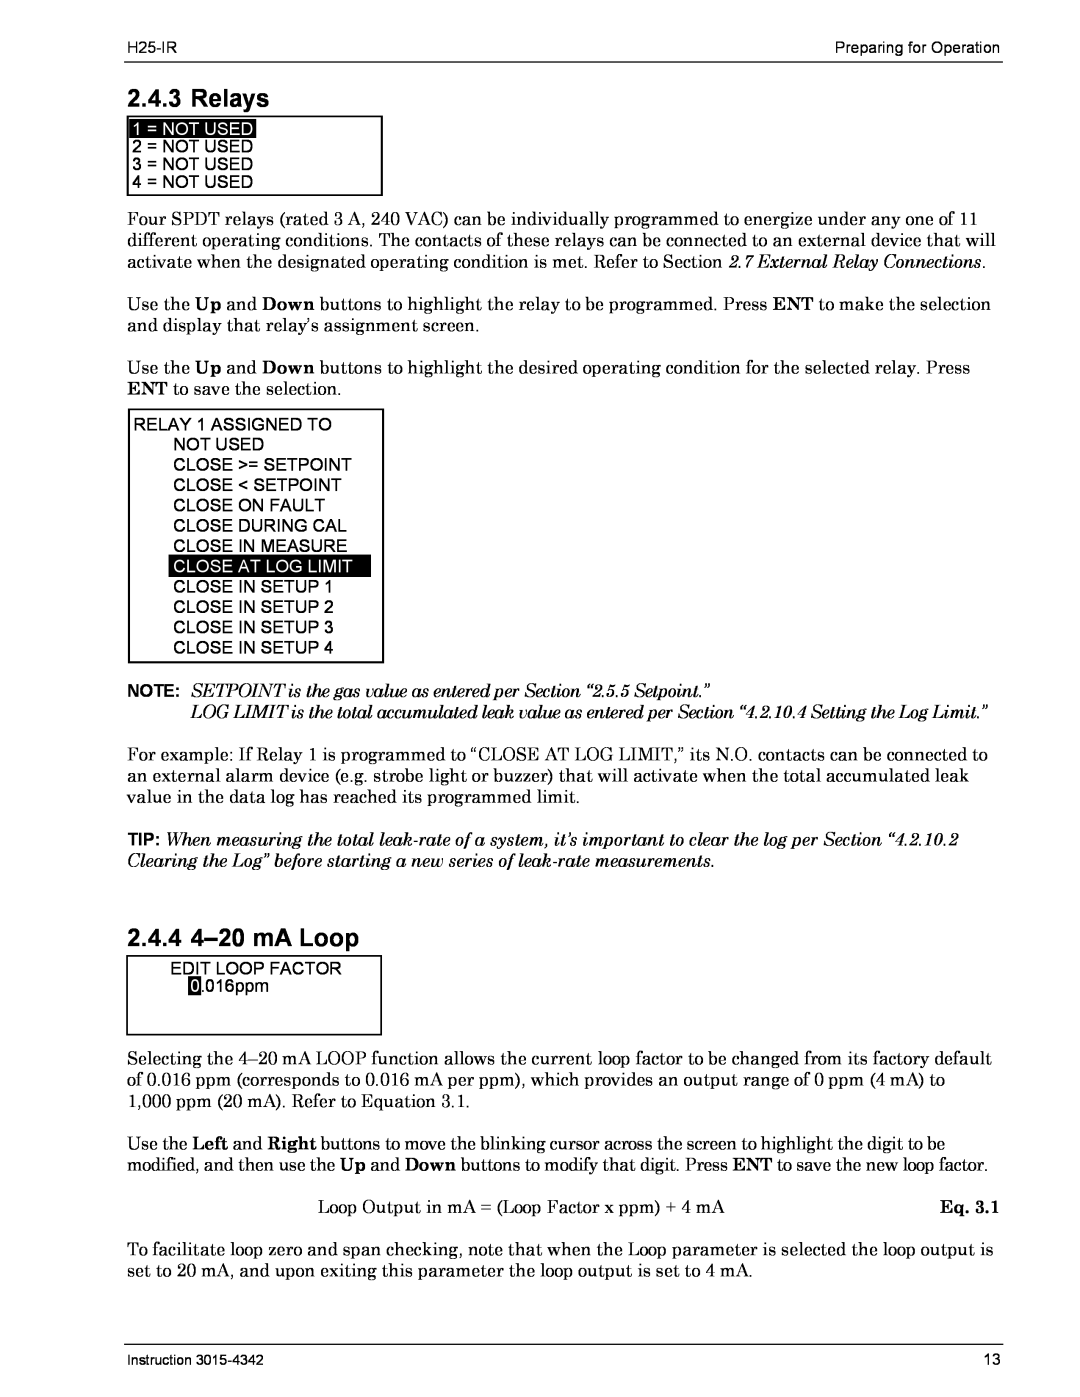 Bacharach H25-IR manual Relays, 2.4.4 4-20mA Loop, 1 = NOT USED, Close At Log Limit 